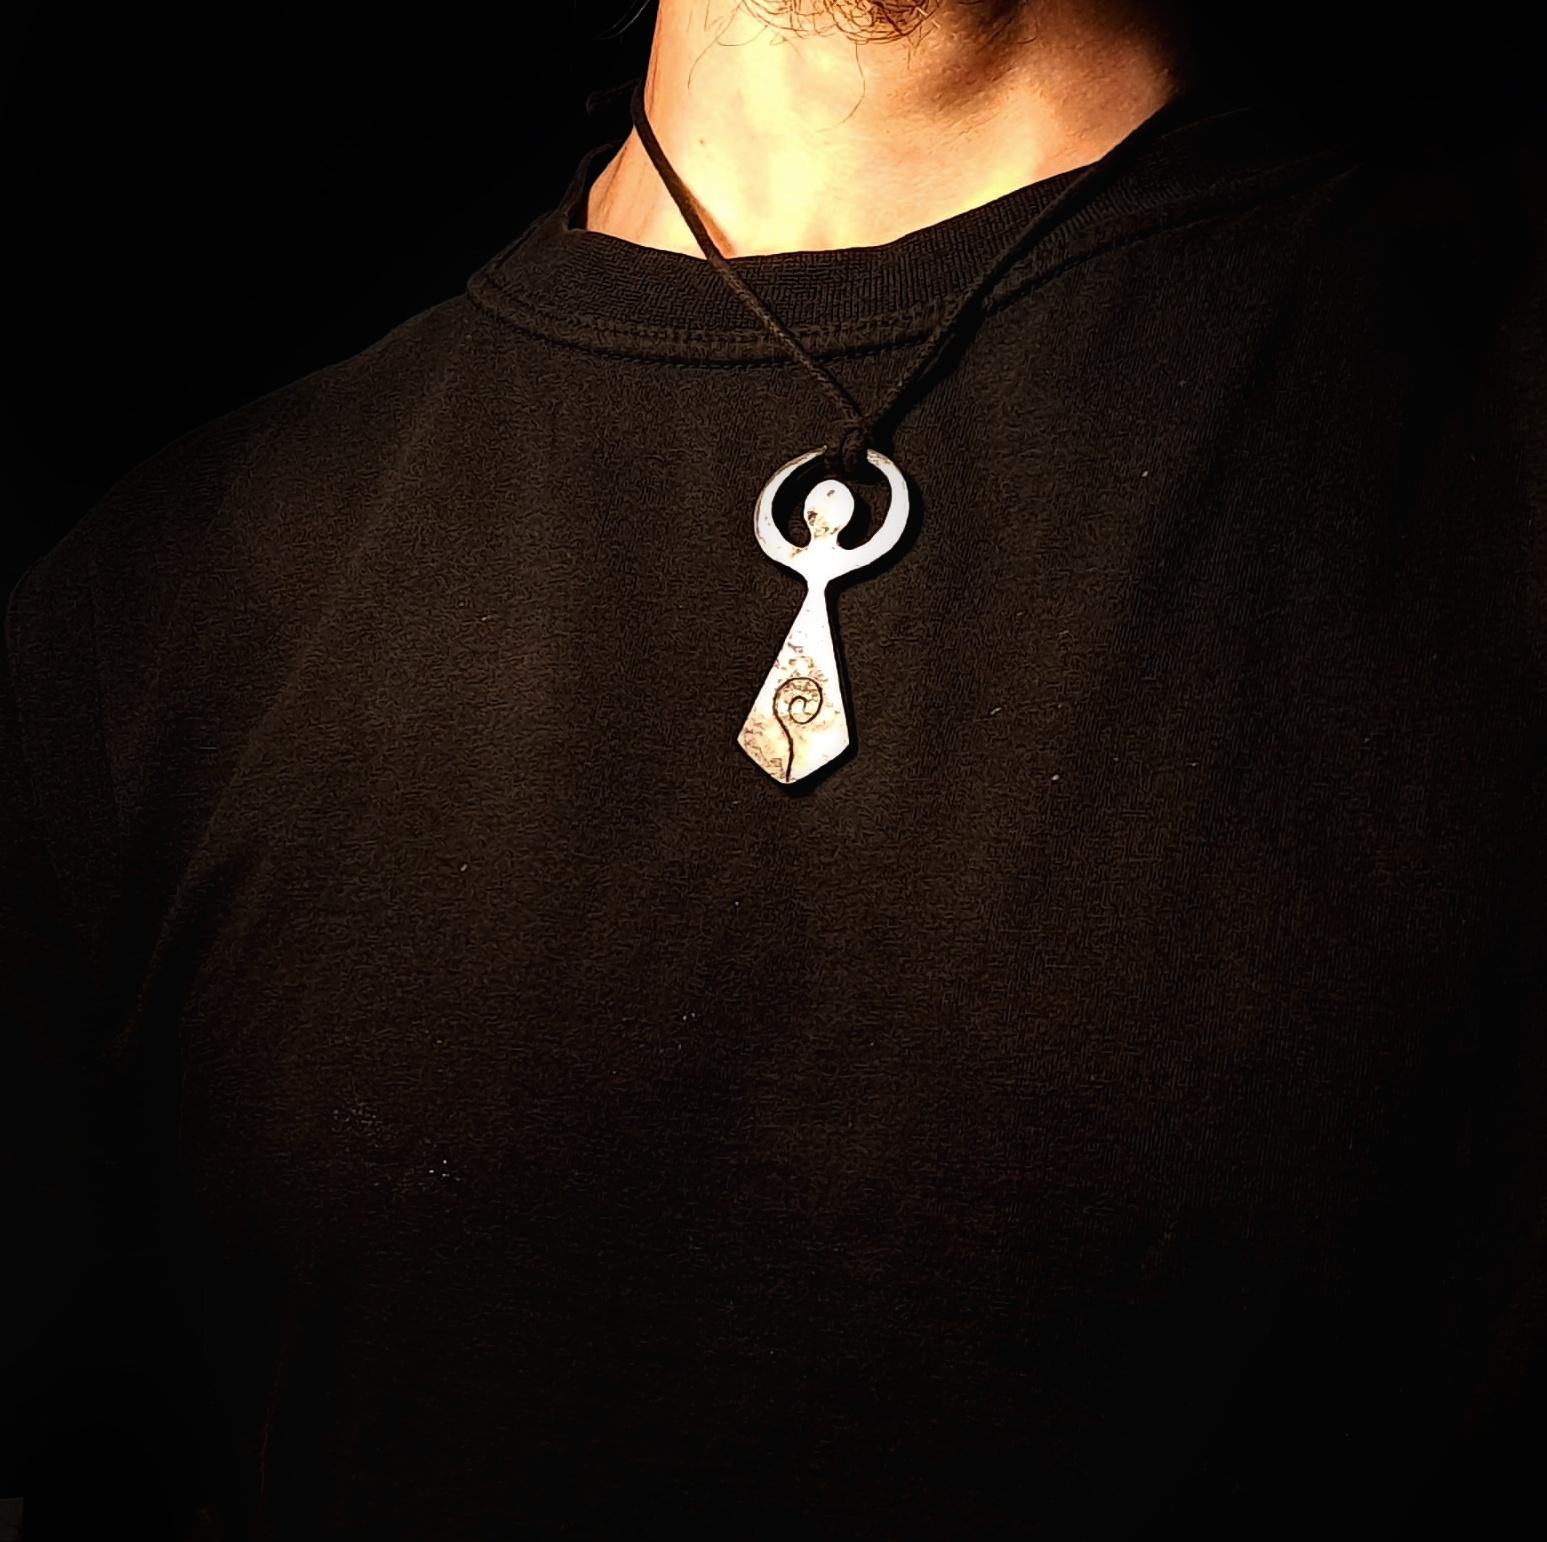 model wearing a moon goddess pendant